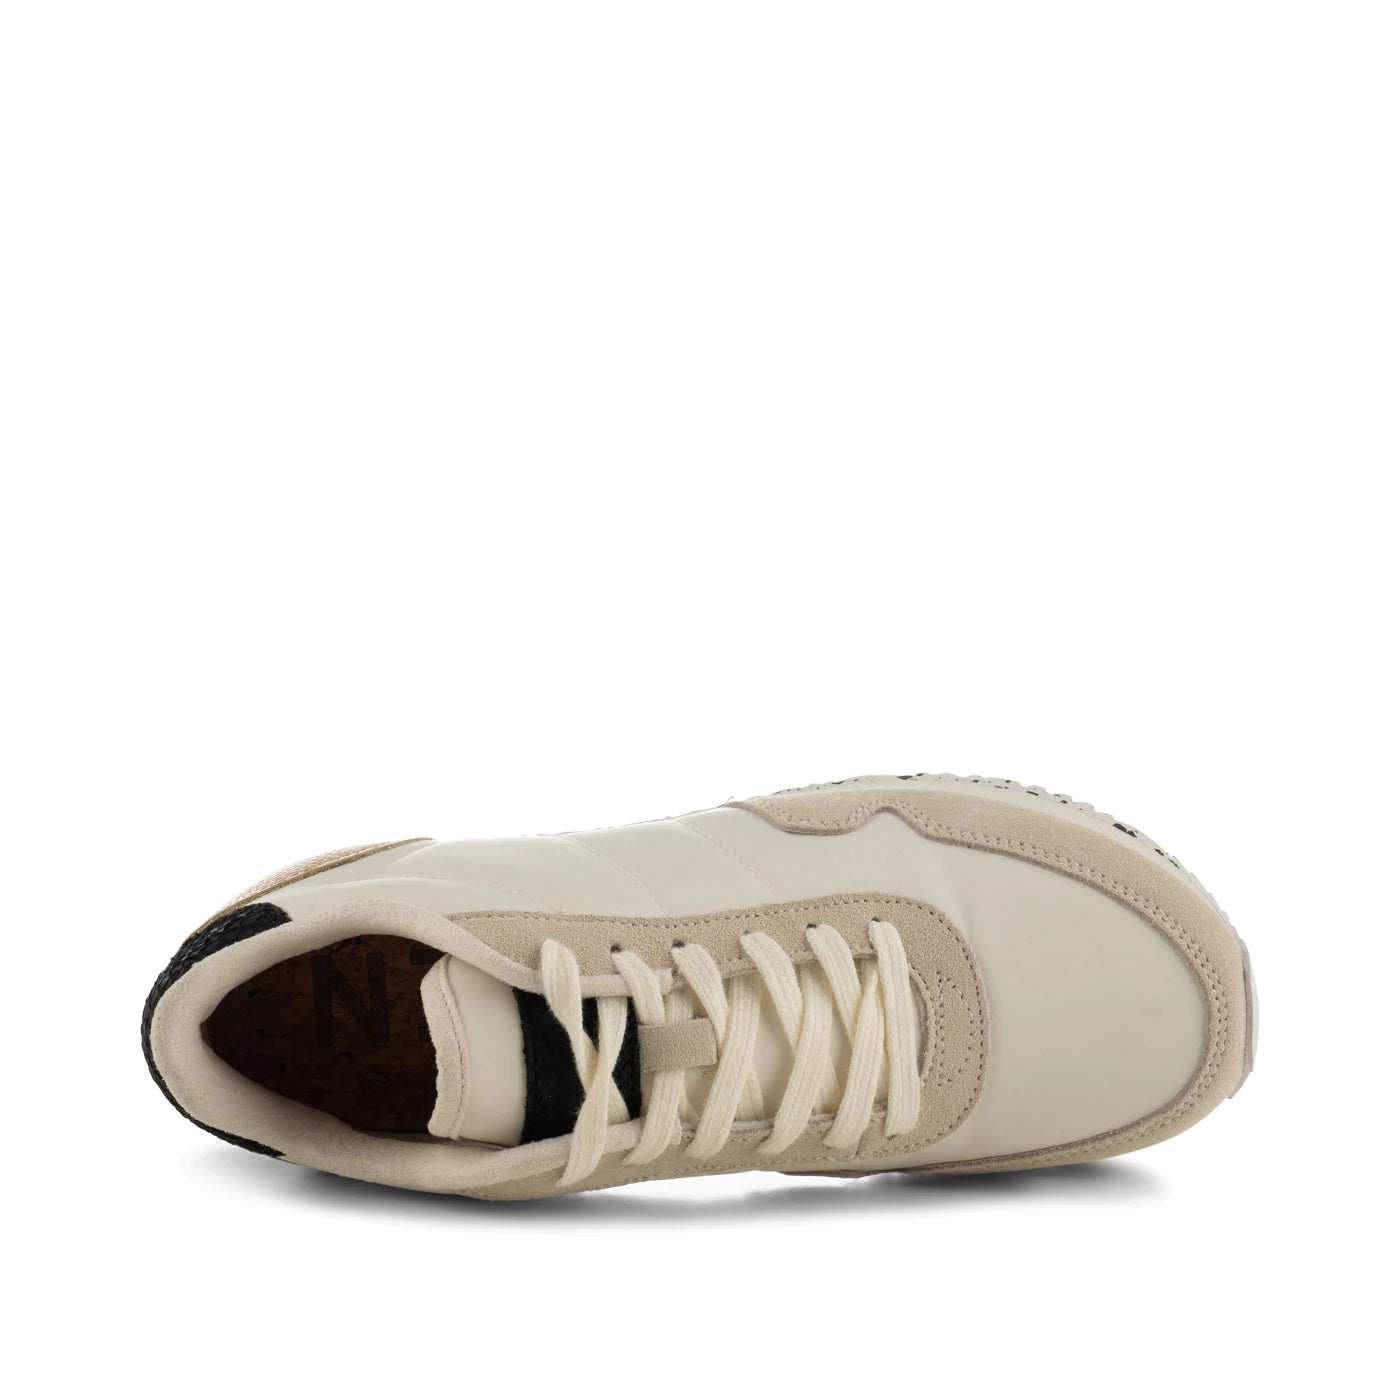 Nora III Leather - Whisper White - Sneakers